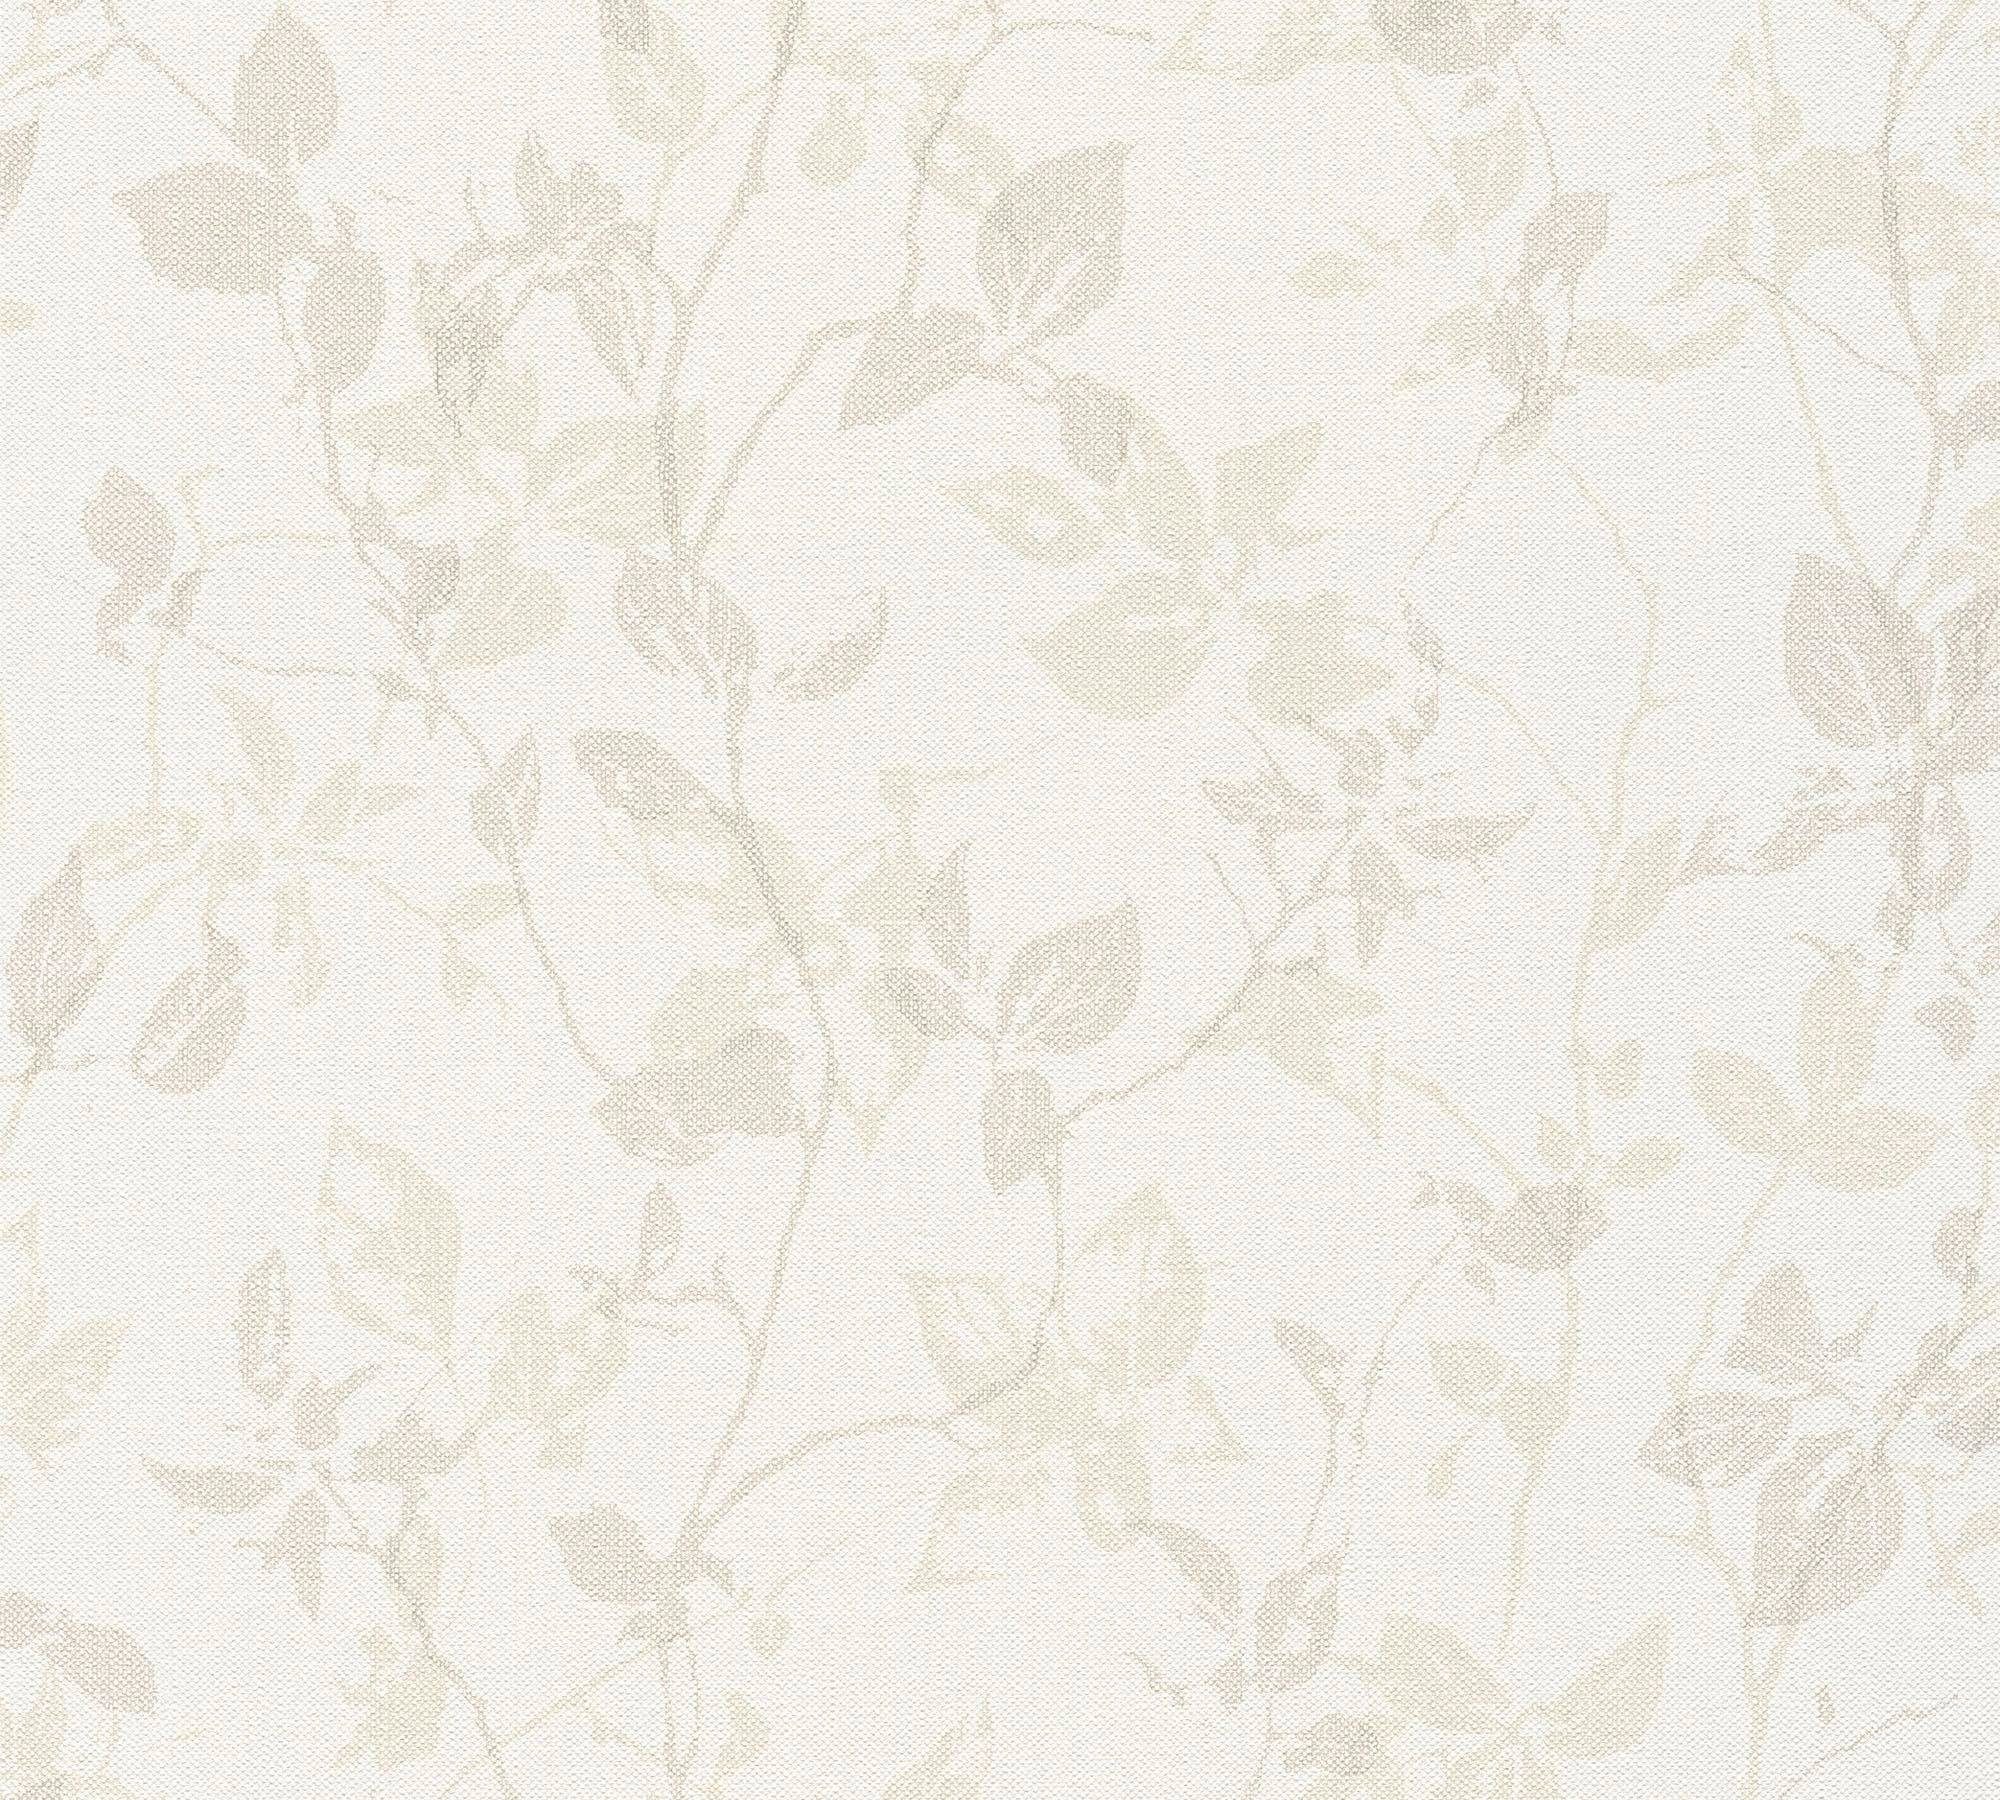 Tapete living geblümt, Blumen Hygge, A.S. creme/grau/beige walls Création Landhaus floral, Vliestapete